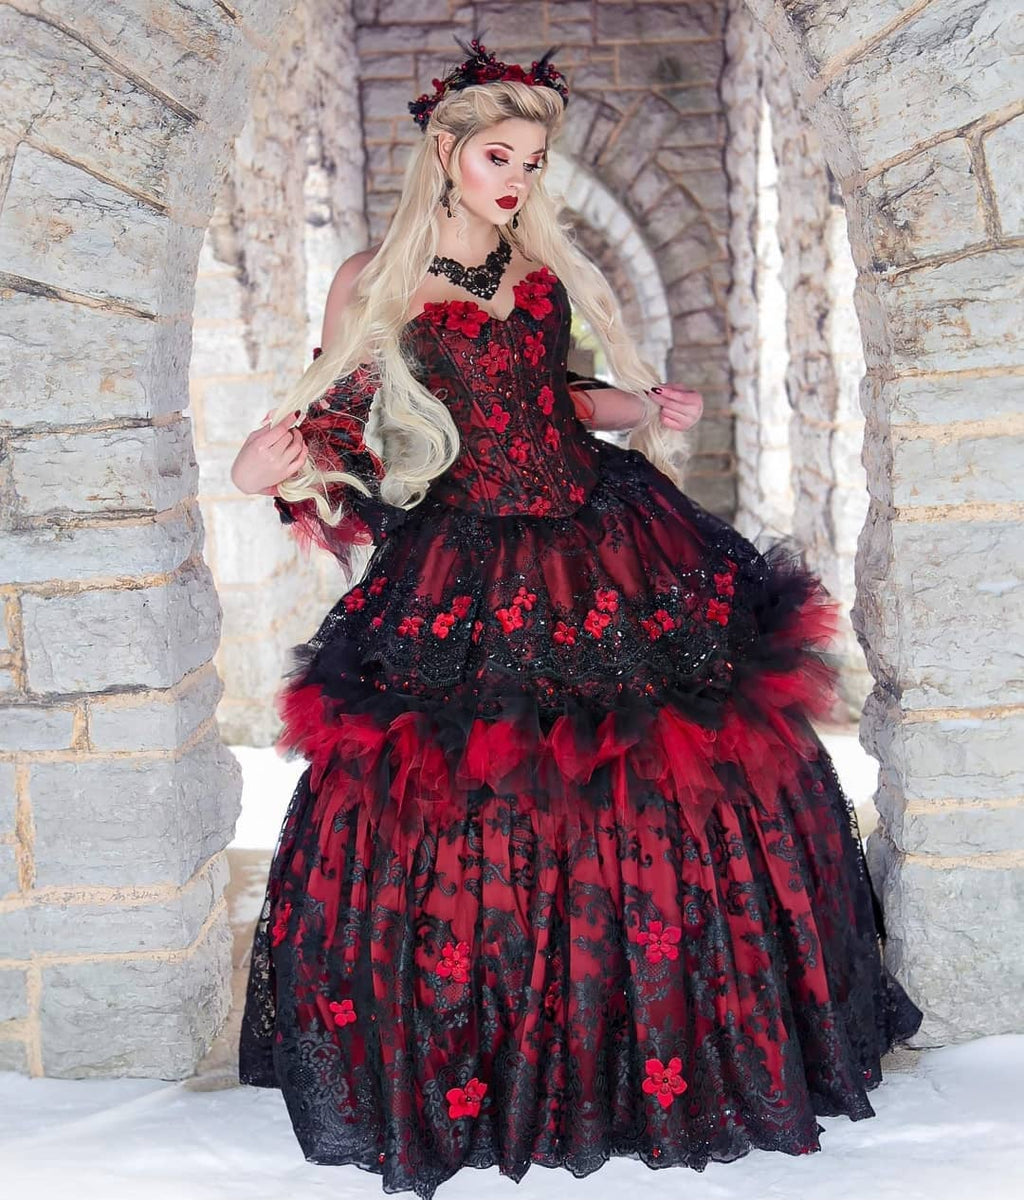 Pin by Jennifer Kretchmer on Fantasy Dress | Fantasy dress, Pretty dresses,  Fairytale dress